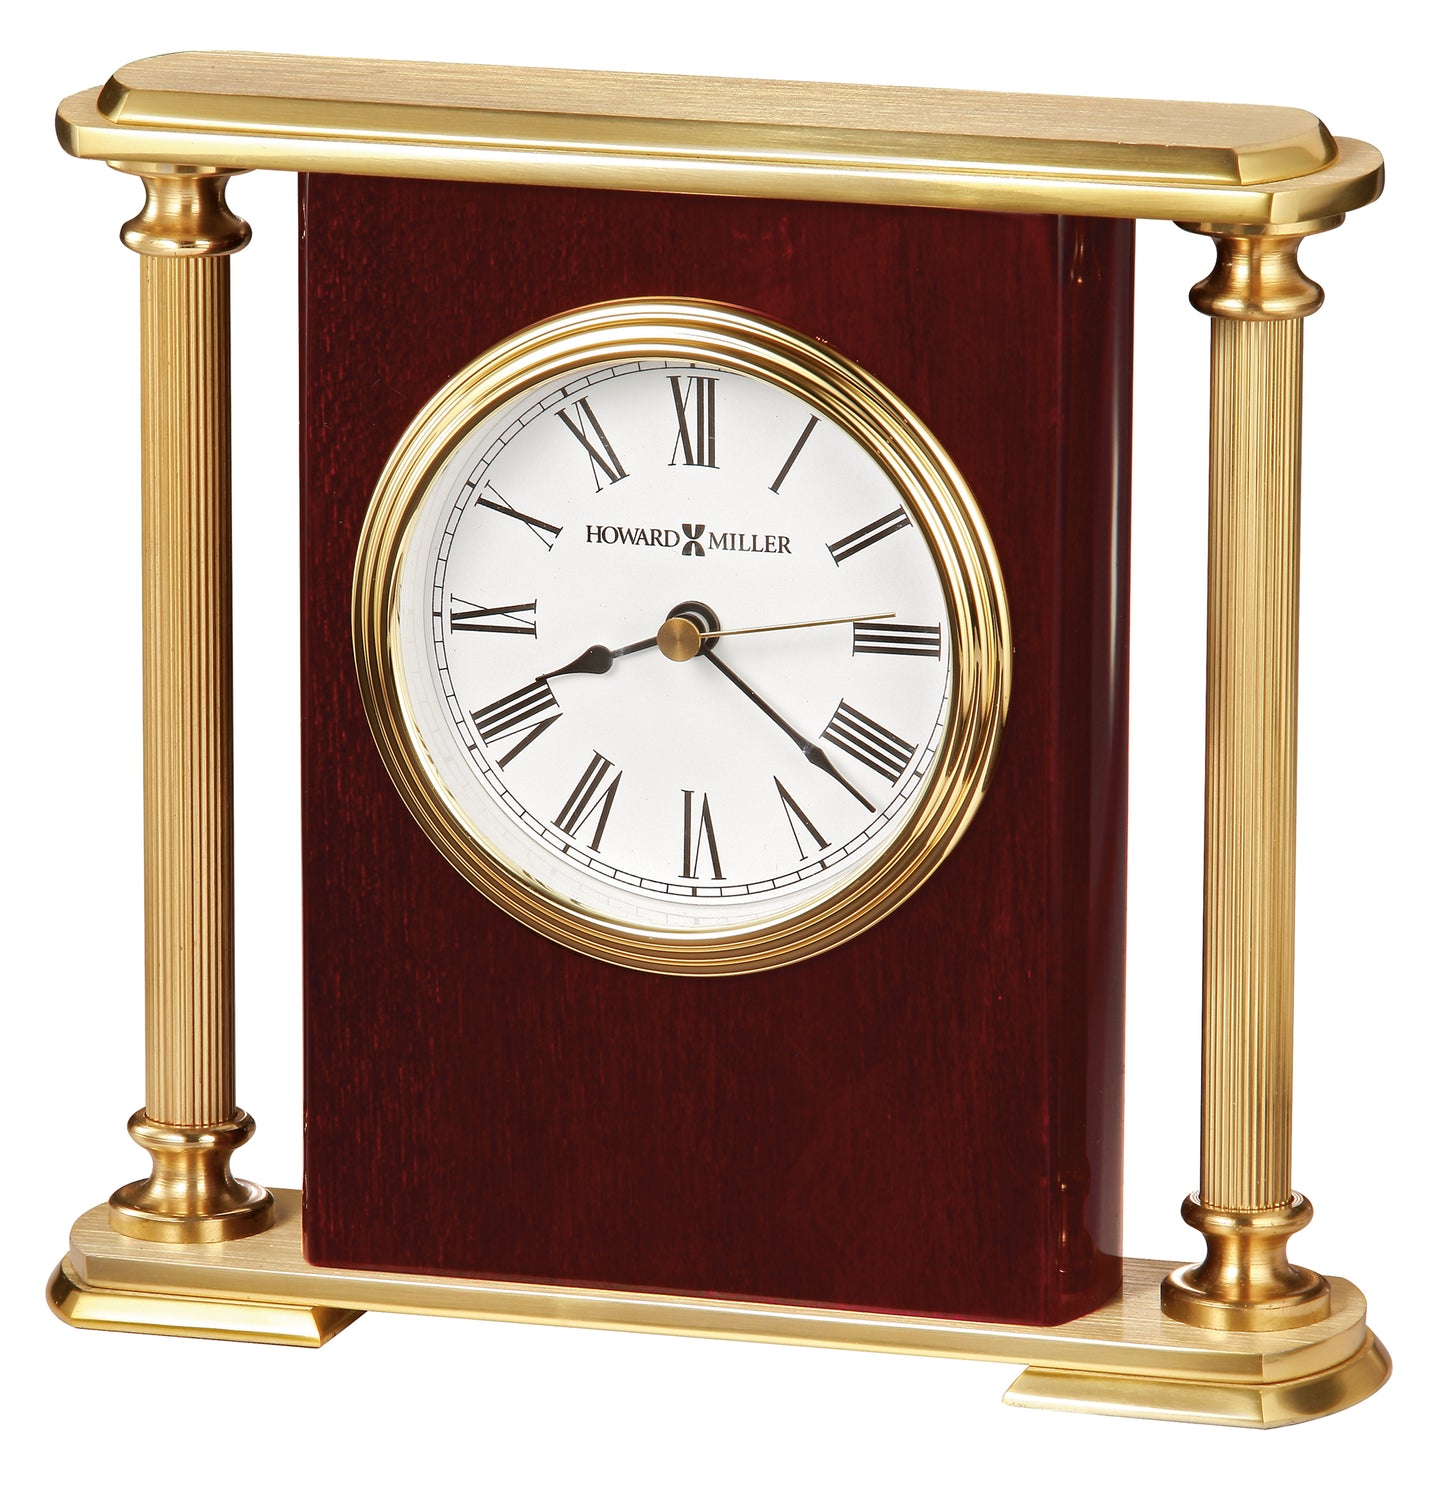 HOWARD MILLER ROSEWOOD ENCORE BRACKET TABLETOP CLOCK 645104 - Grandfather Clocks